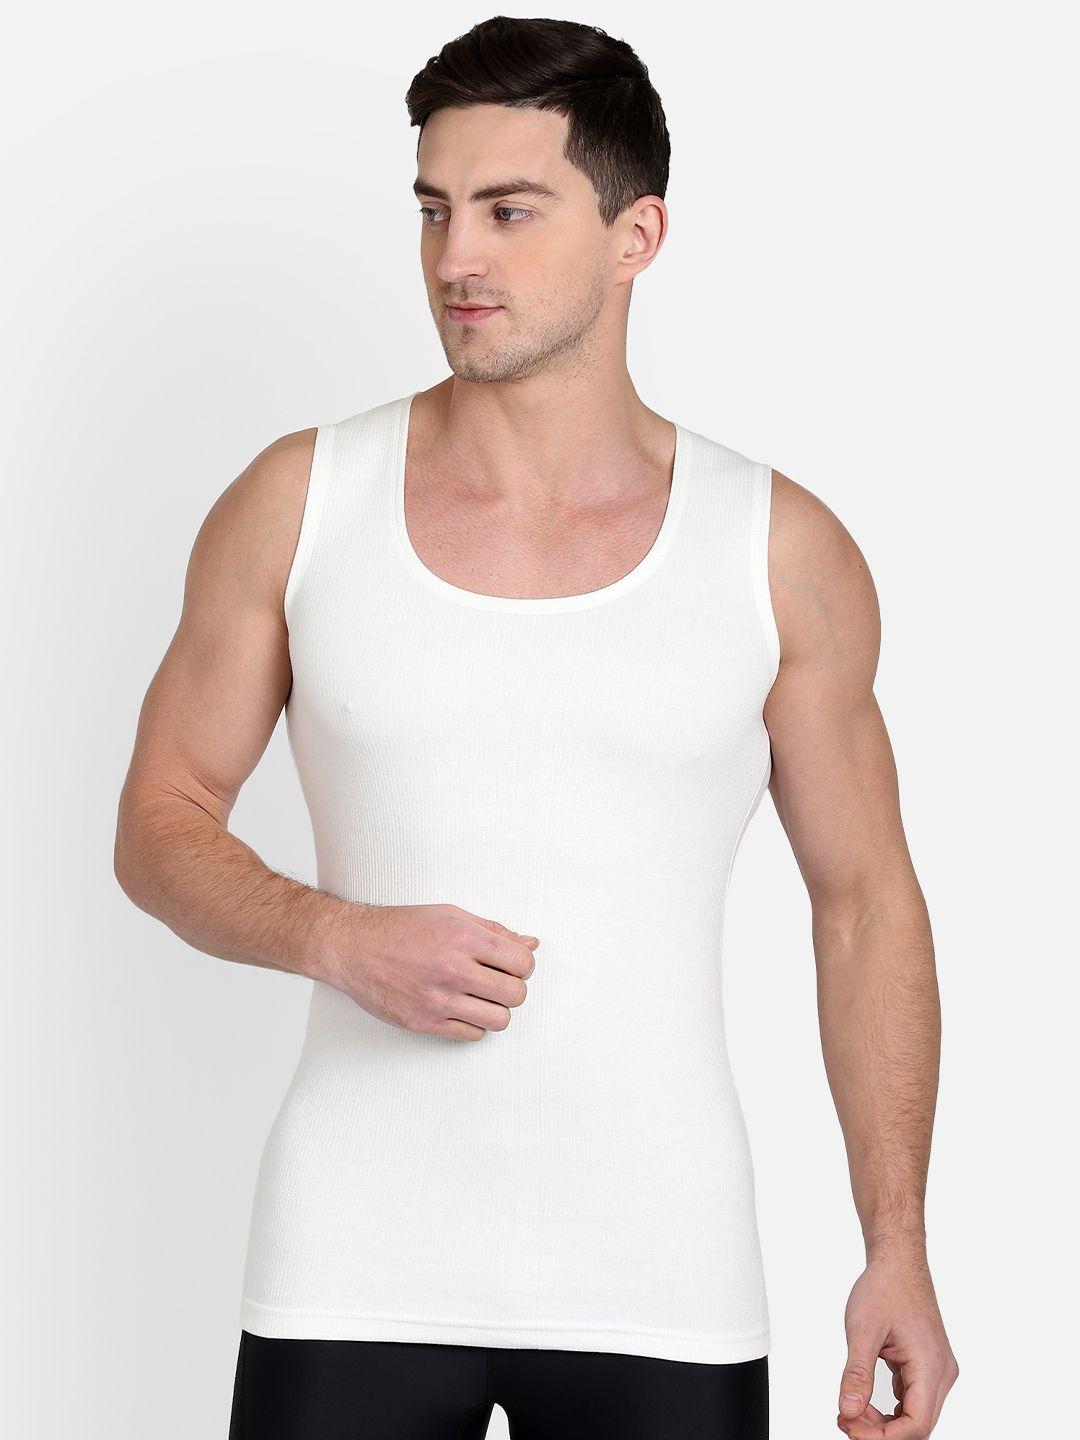 dyca-men-off-white-sleeveless-thermal-t-shirt